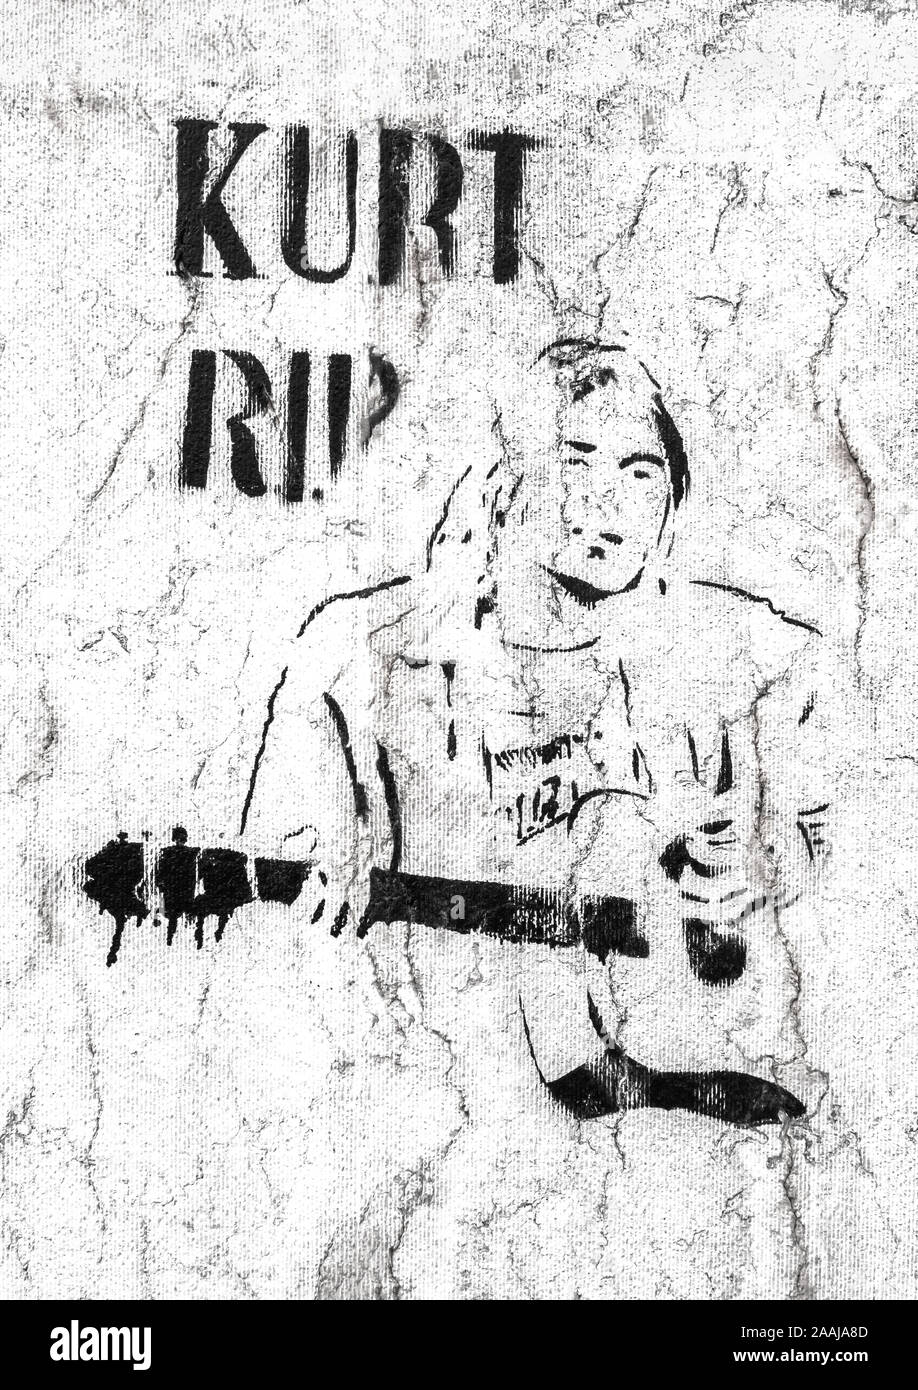 Kurt Cobain character. Graffiti / stencil on grungy wall. Bergamo, ITALY - May 20, 2019. Stock Photo